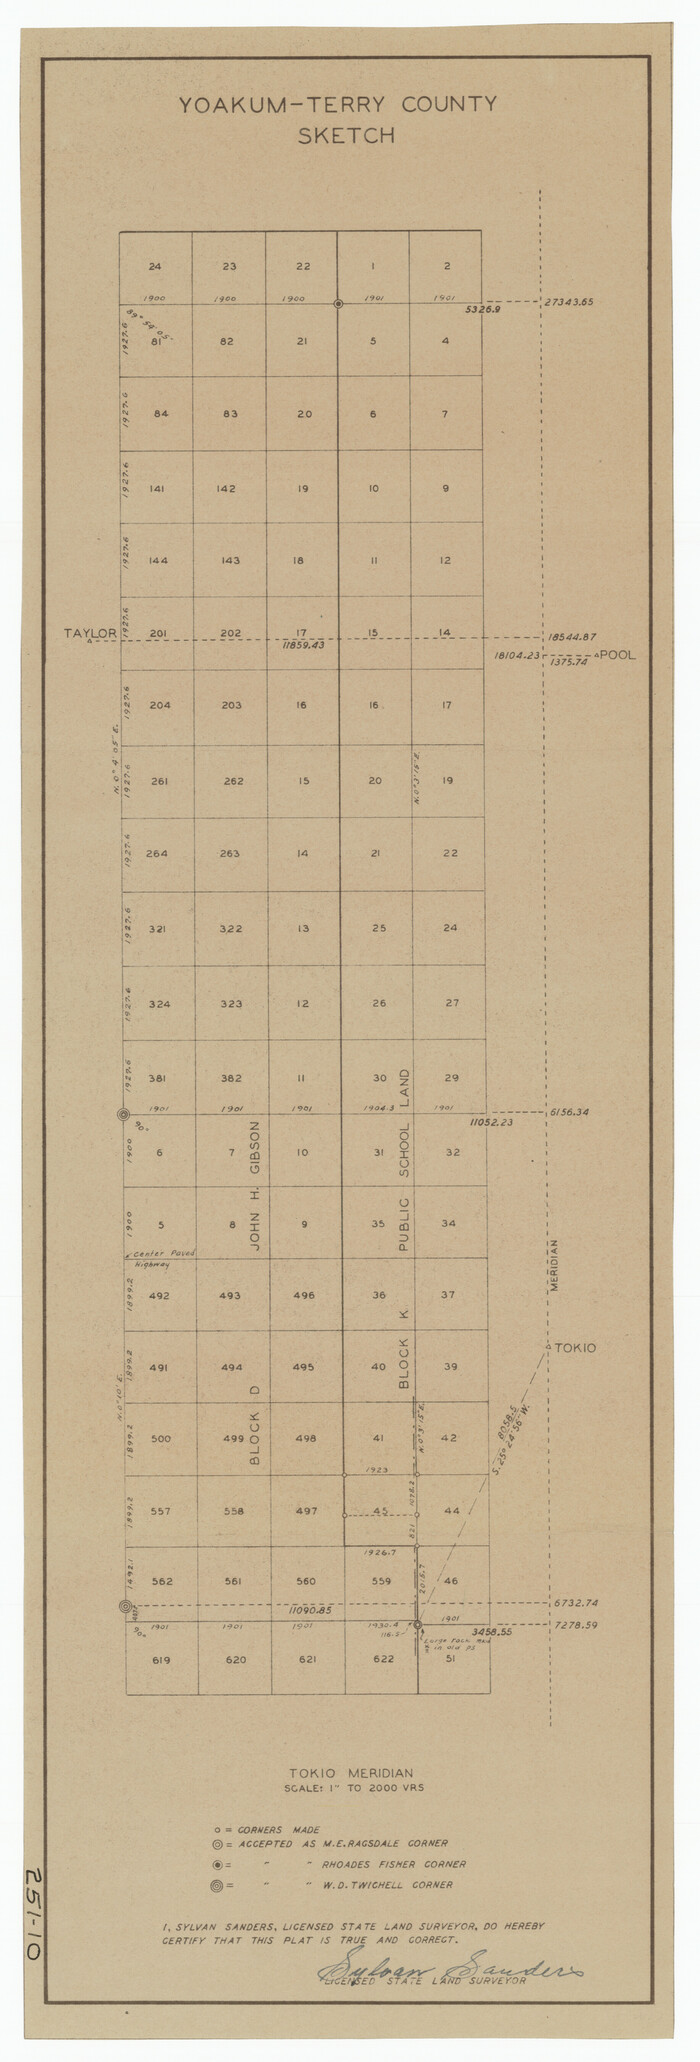 91977, Yoakum-Terry County Sketch, Twichell Survey Records